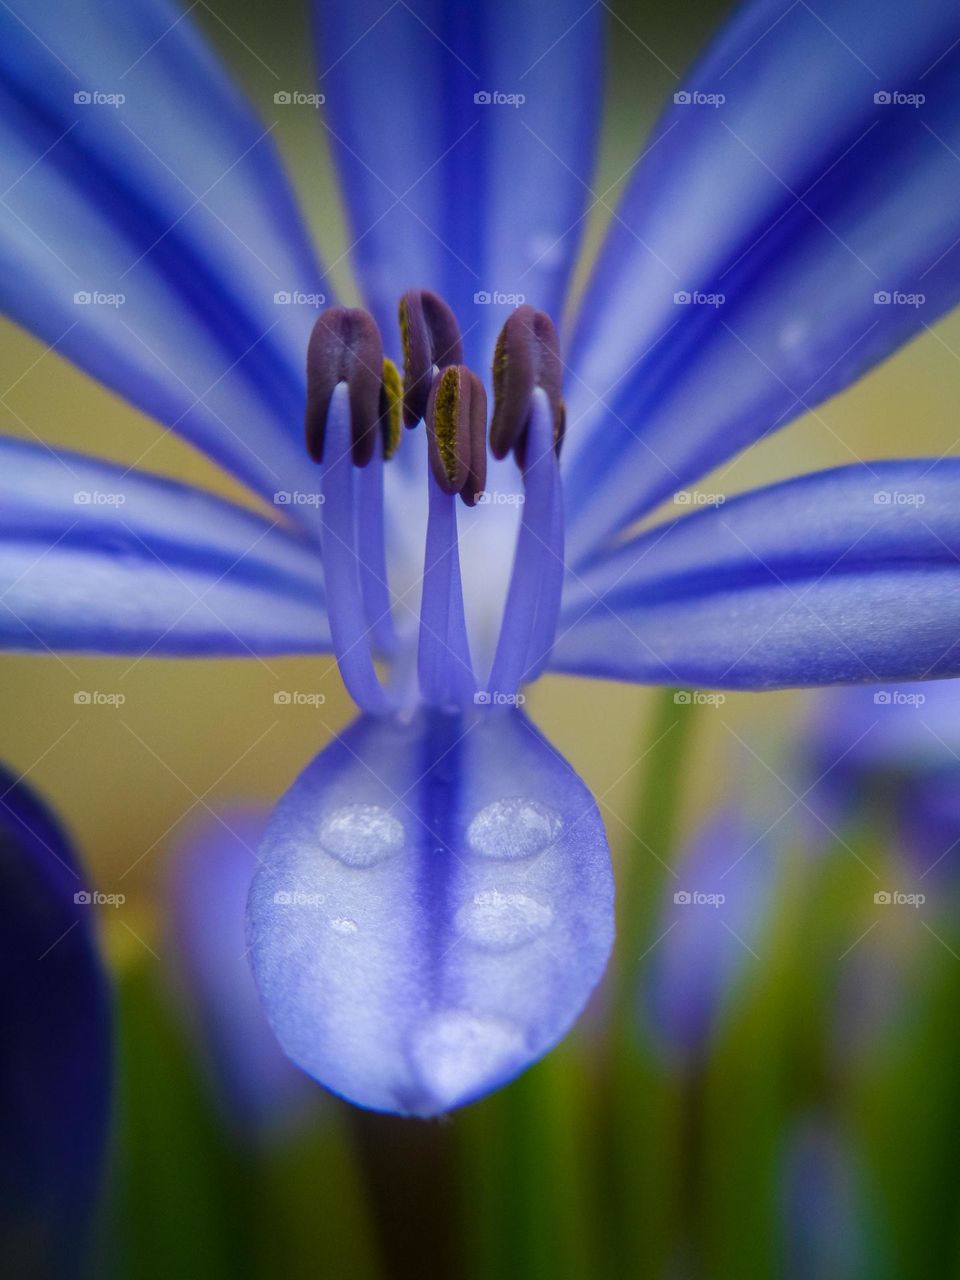 Purple flower close up